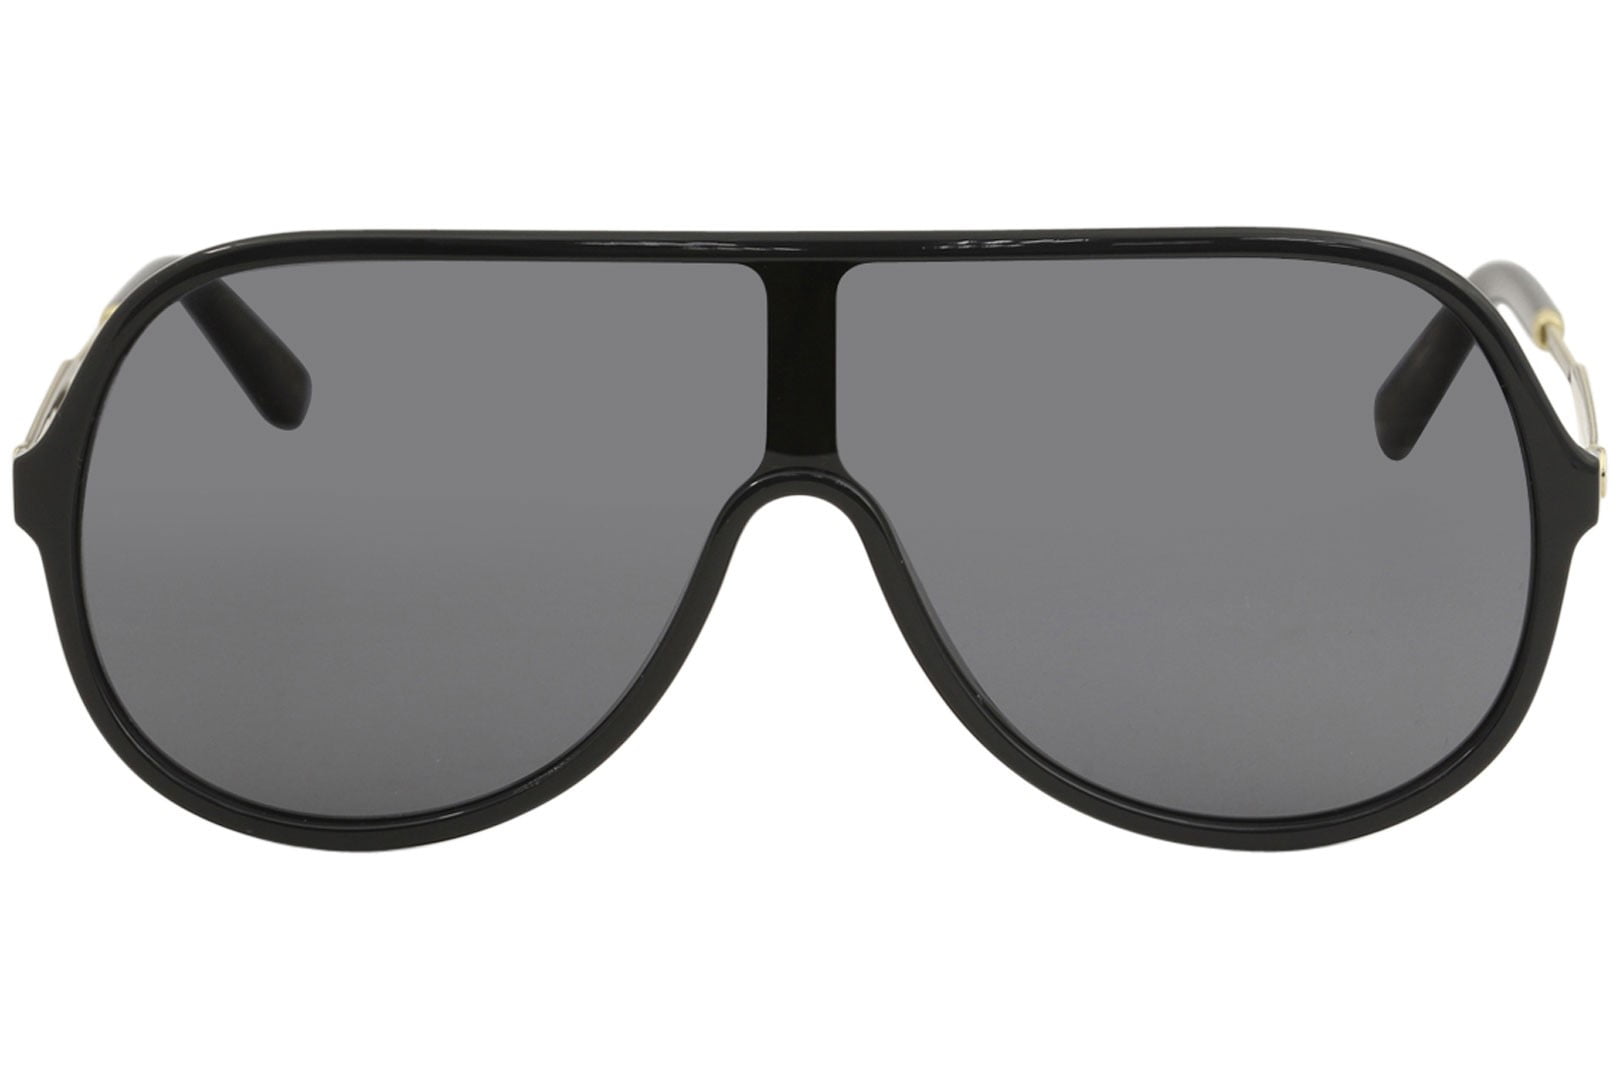 Gucci Black Shield Sunglasses Walmart.com